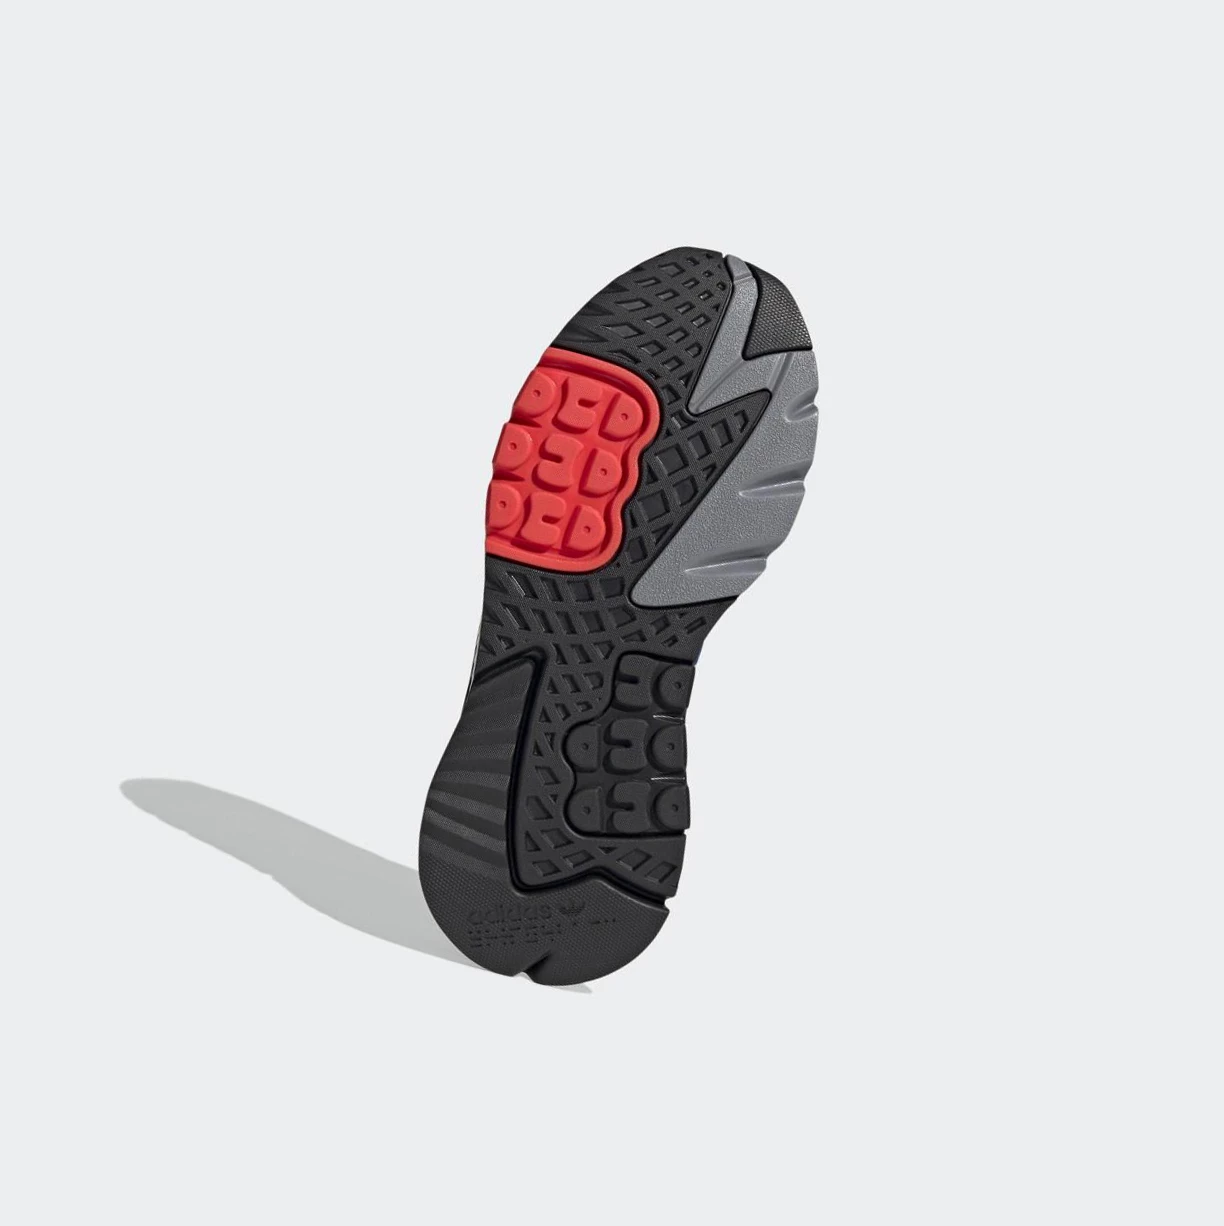 Originálne Topánky Adidas Nite Jogger Damske Modre | 904SKBLMRTG